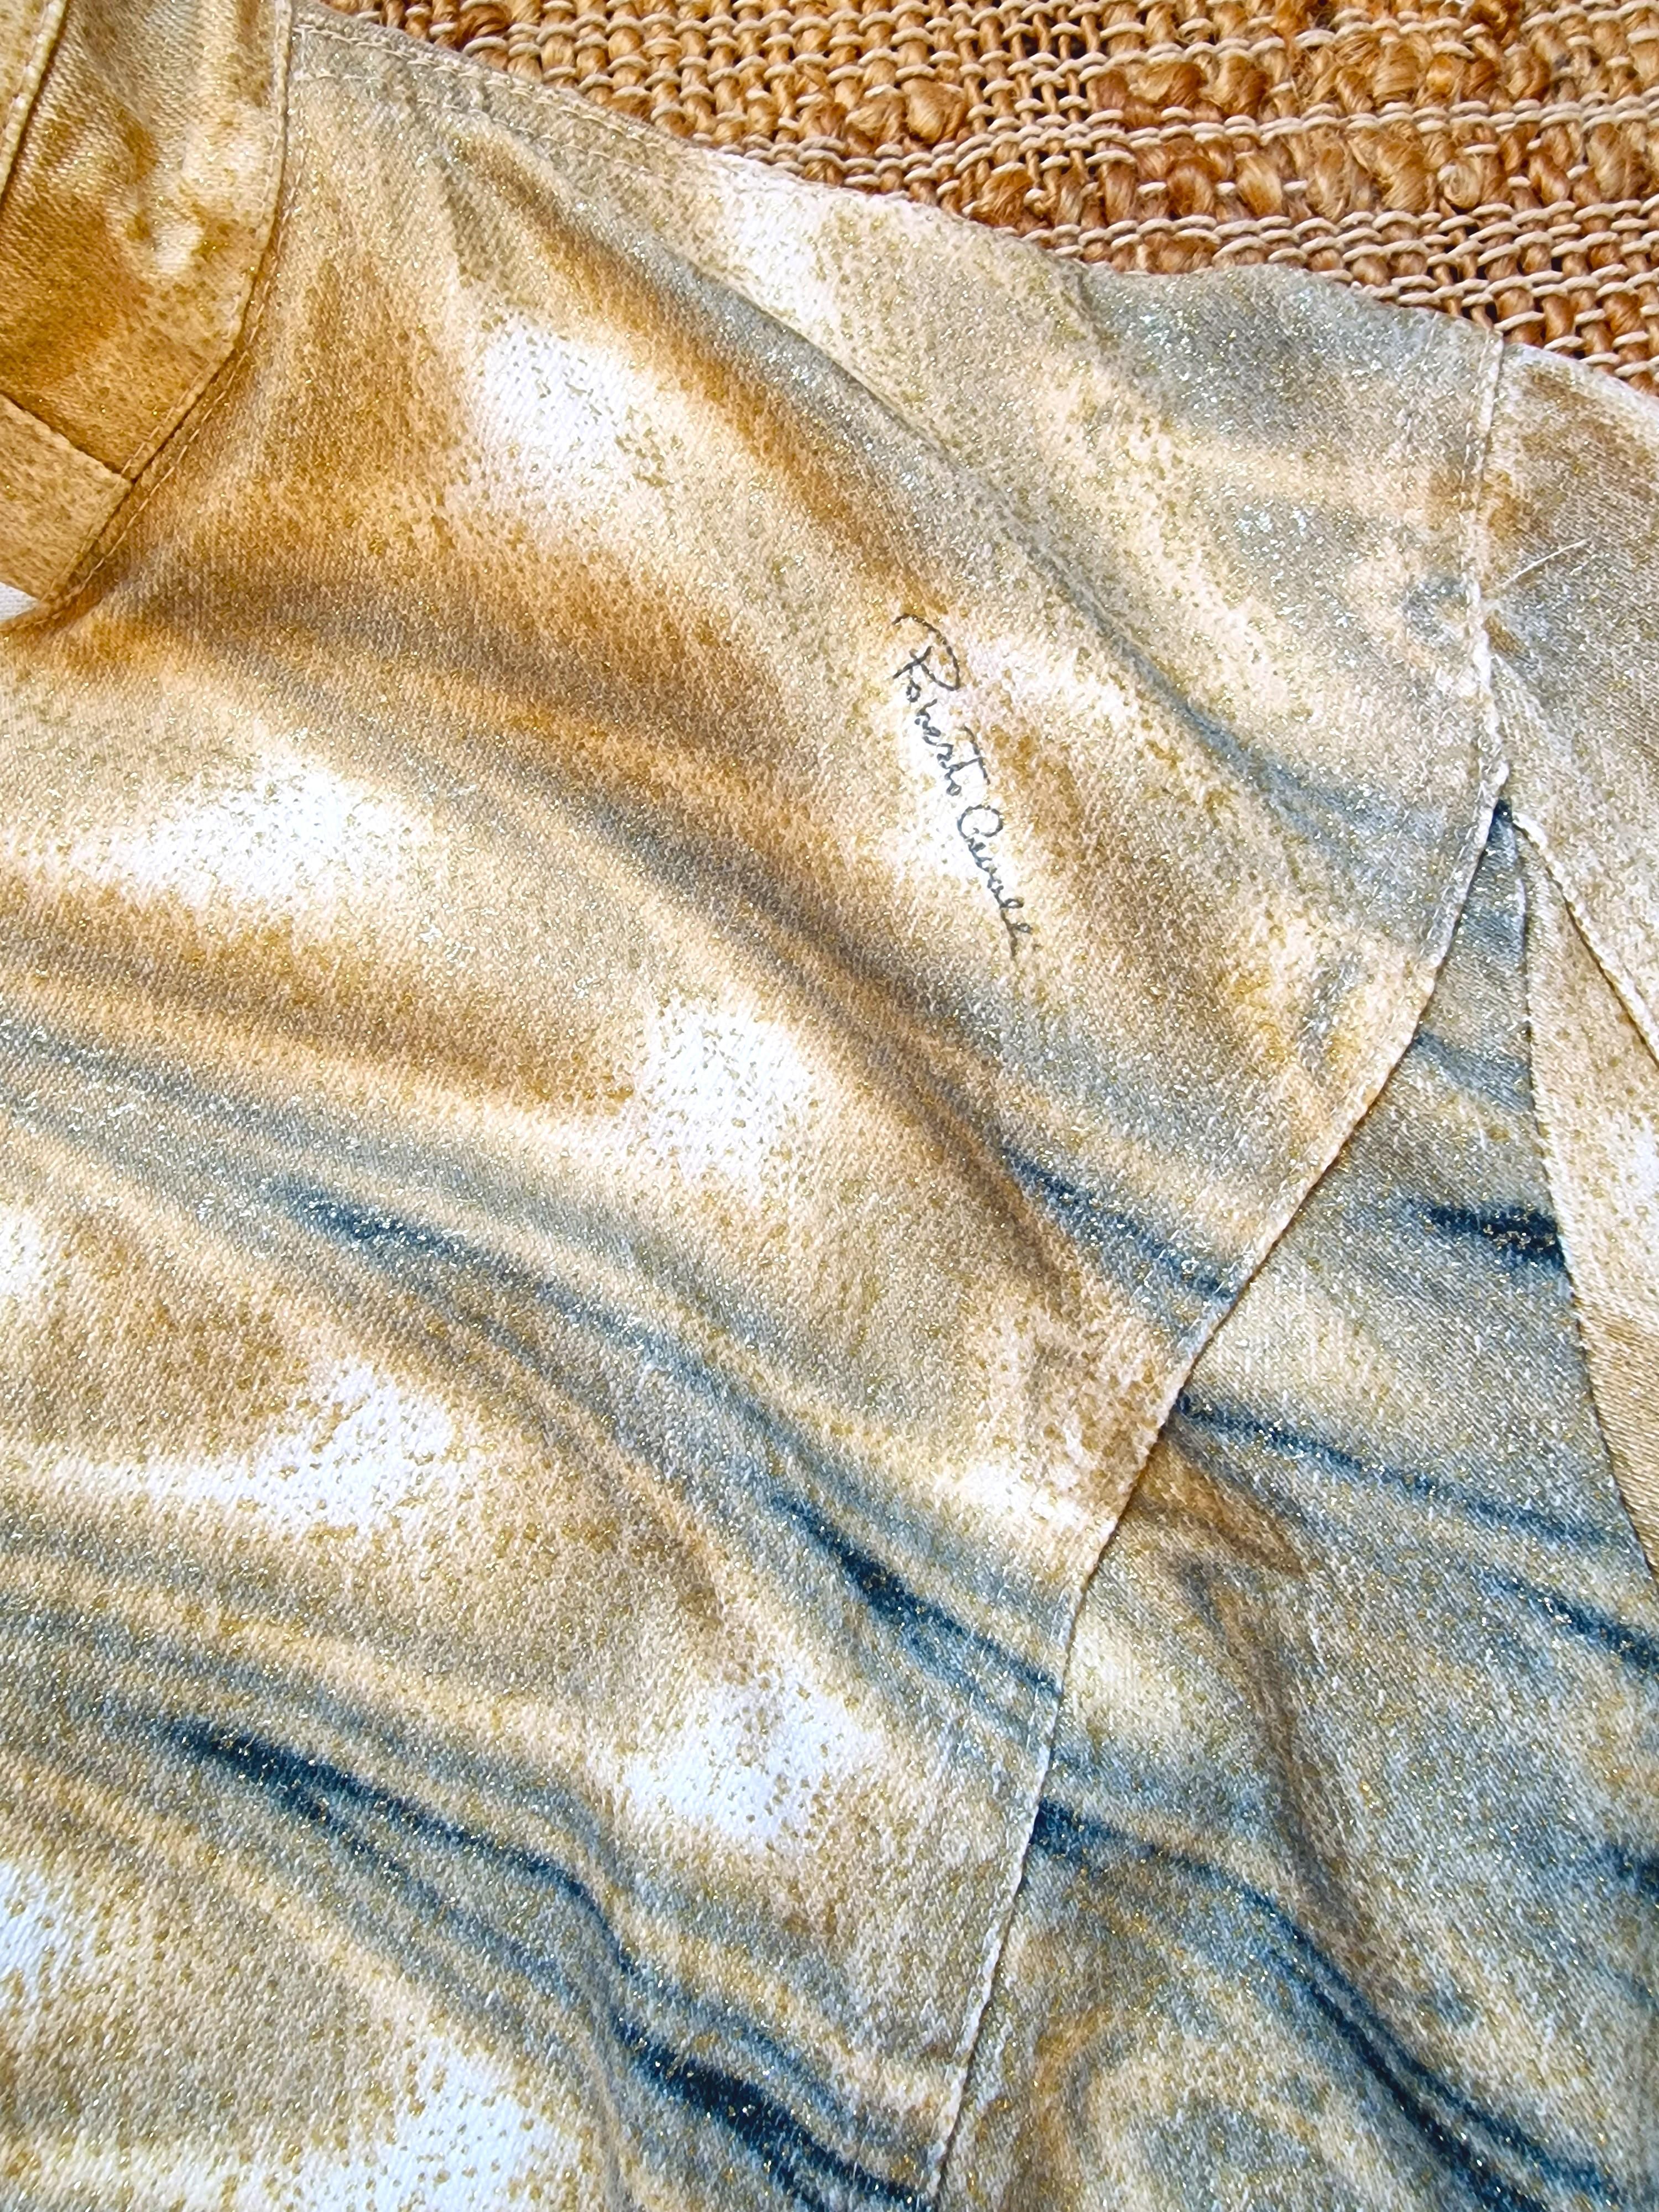 Roberto Cavalli Optical Illusion Rainbow Shiny Striped Gold Golden Metal Jacket For Sale 1